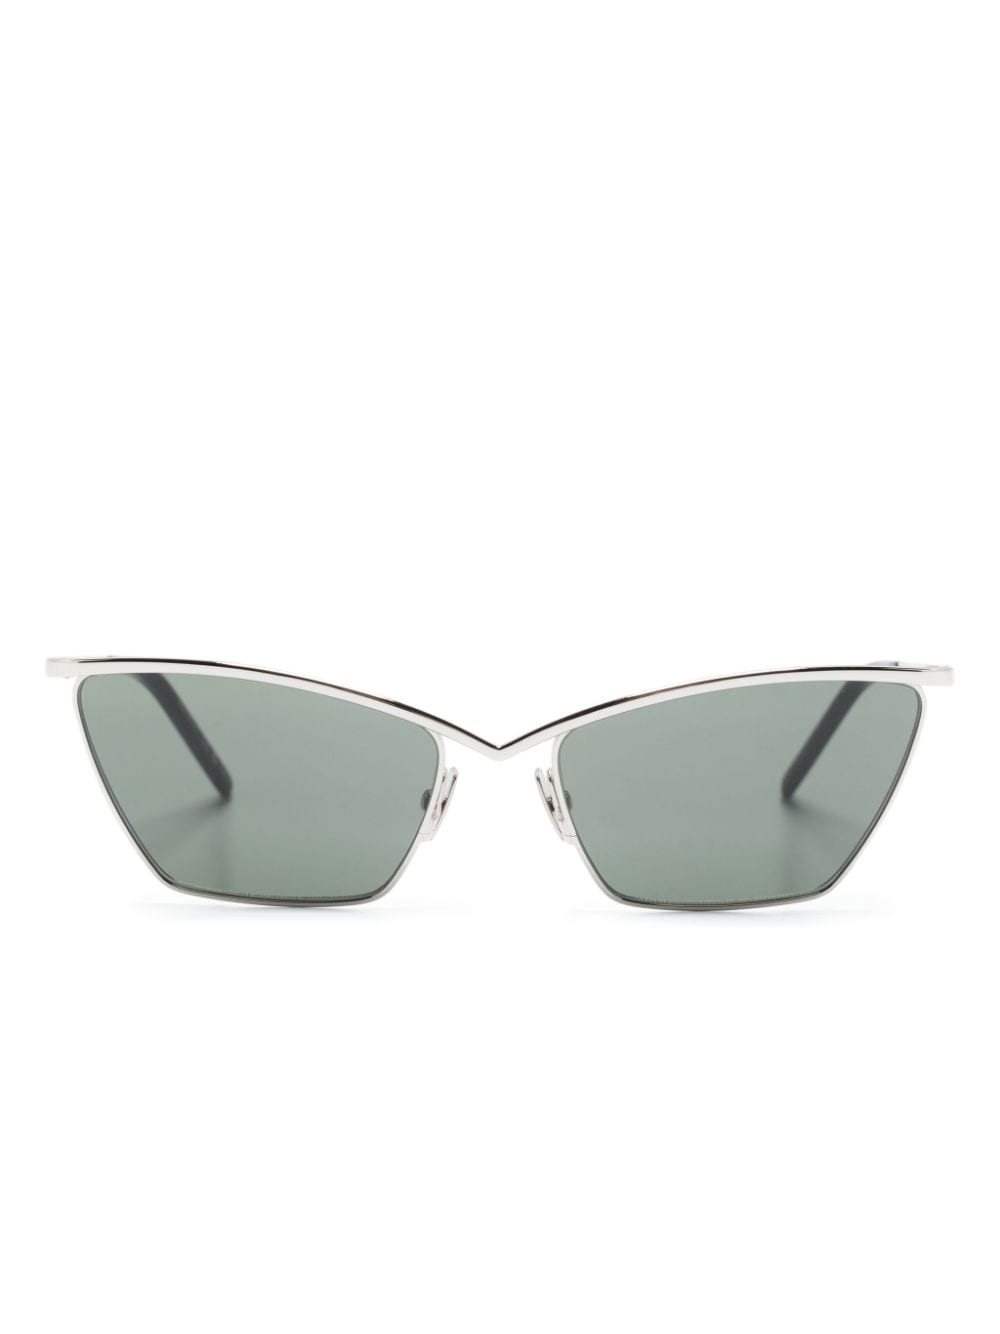 Saint Laurent Eyewear SL637 cat-eye sunglasses - Silver von Saint Laurent Eyewear